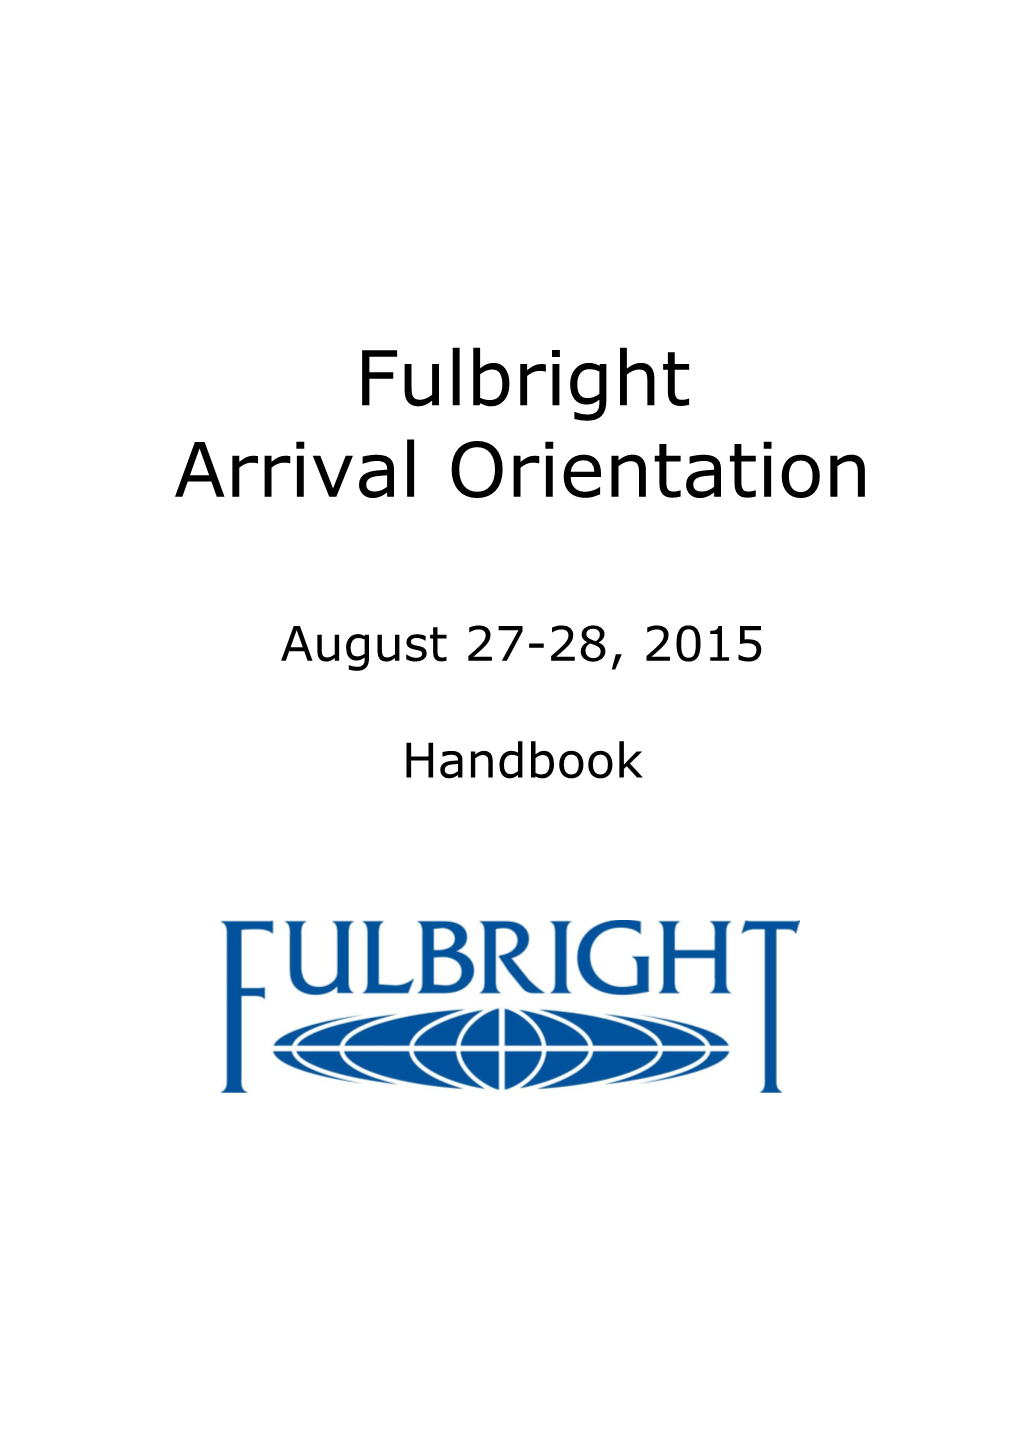 Fulbright Arrival Orientation